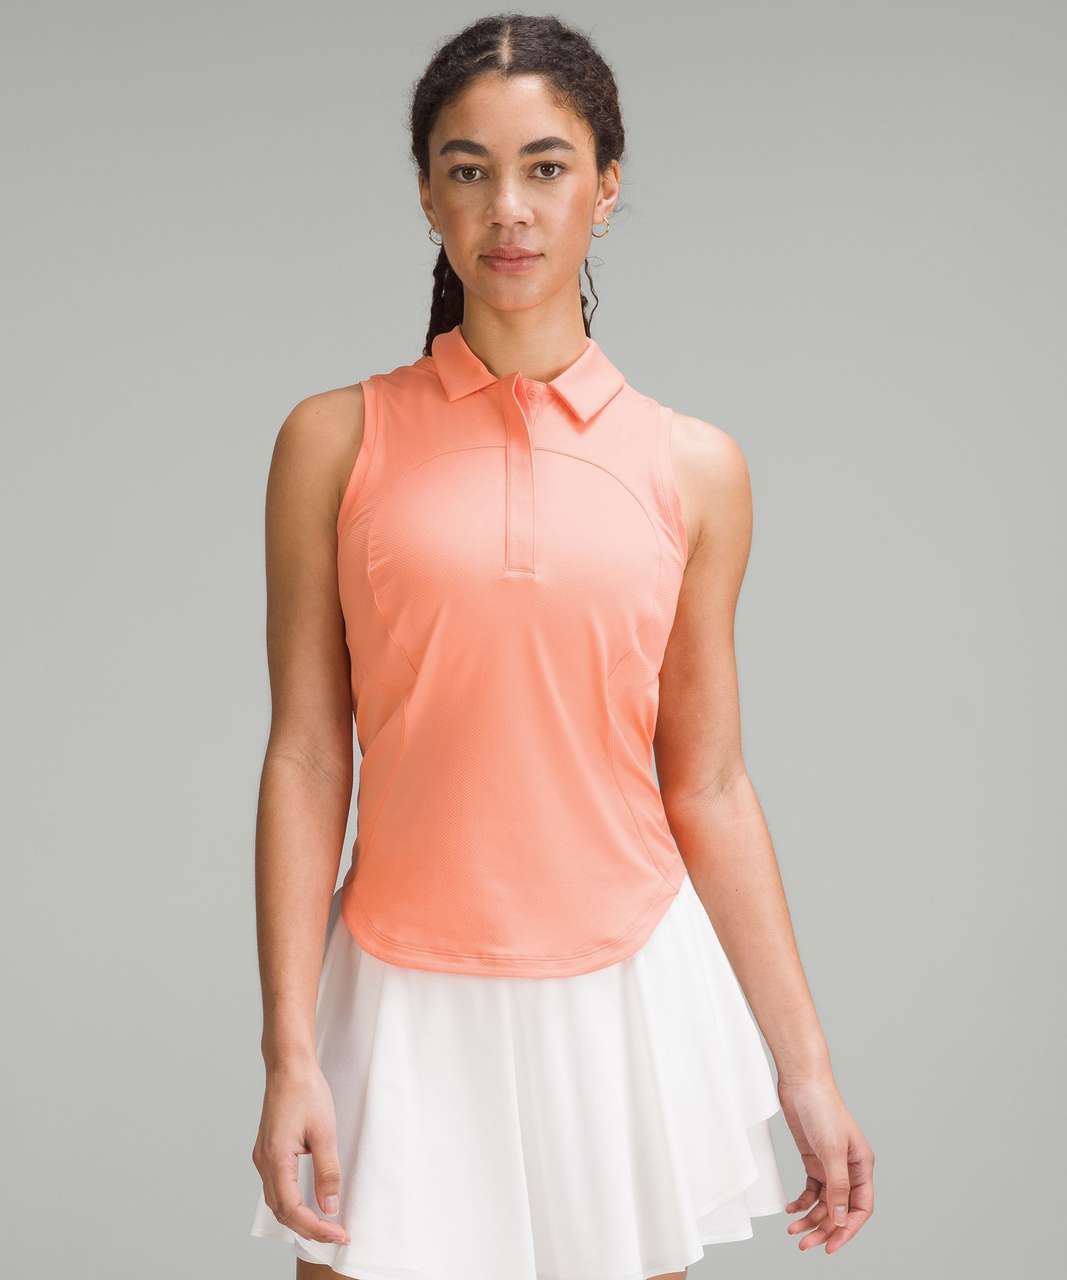 Lululemon Quick-Dry Sleeveless Polo Shirt - Sunny Coral